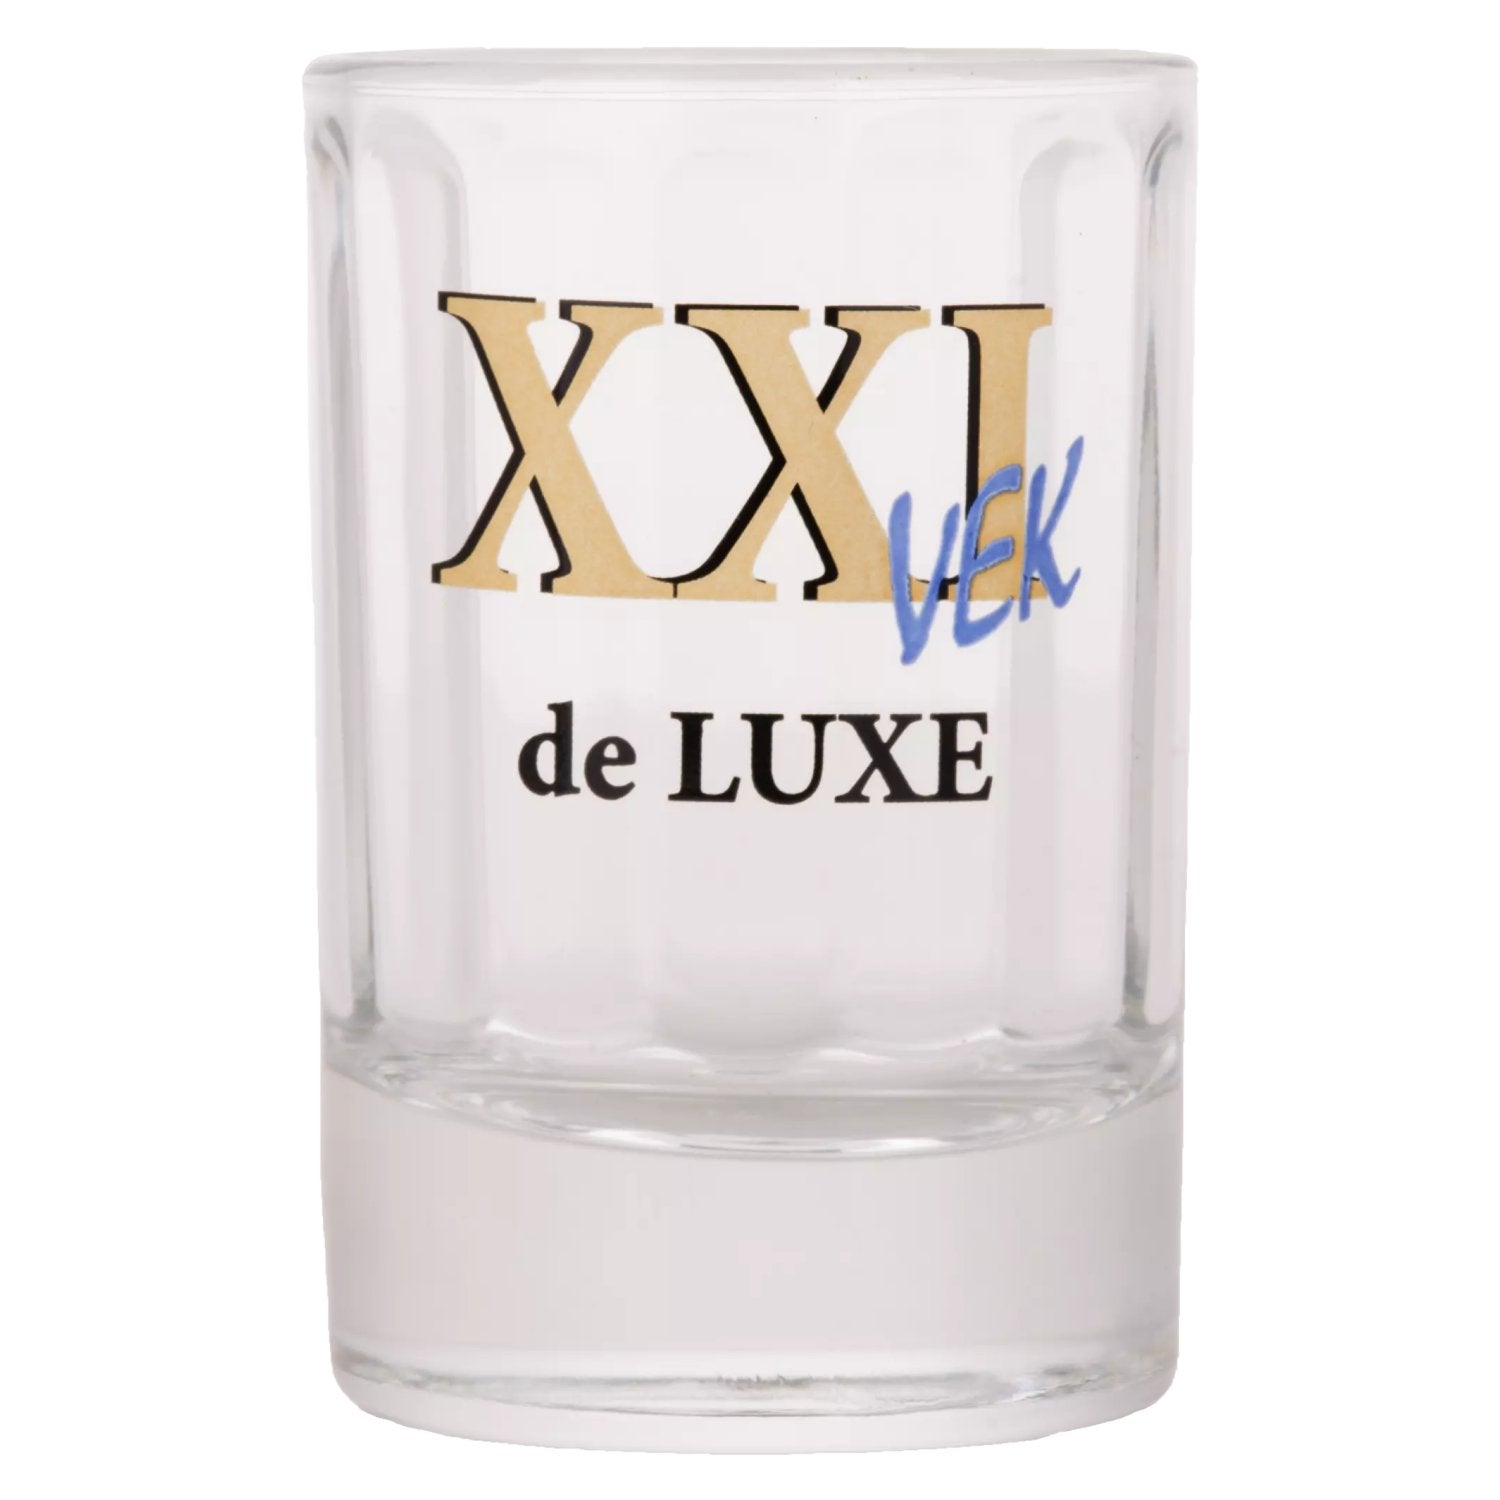 XXI VEK de Luxe Millenium Vodka glass